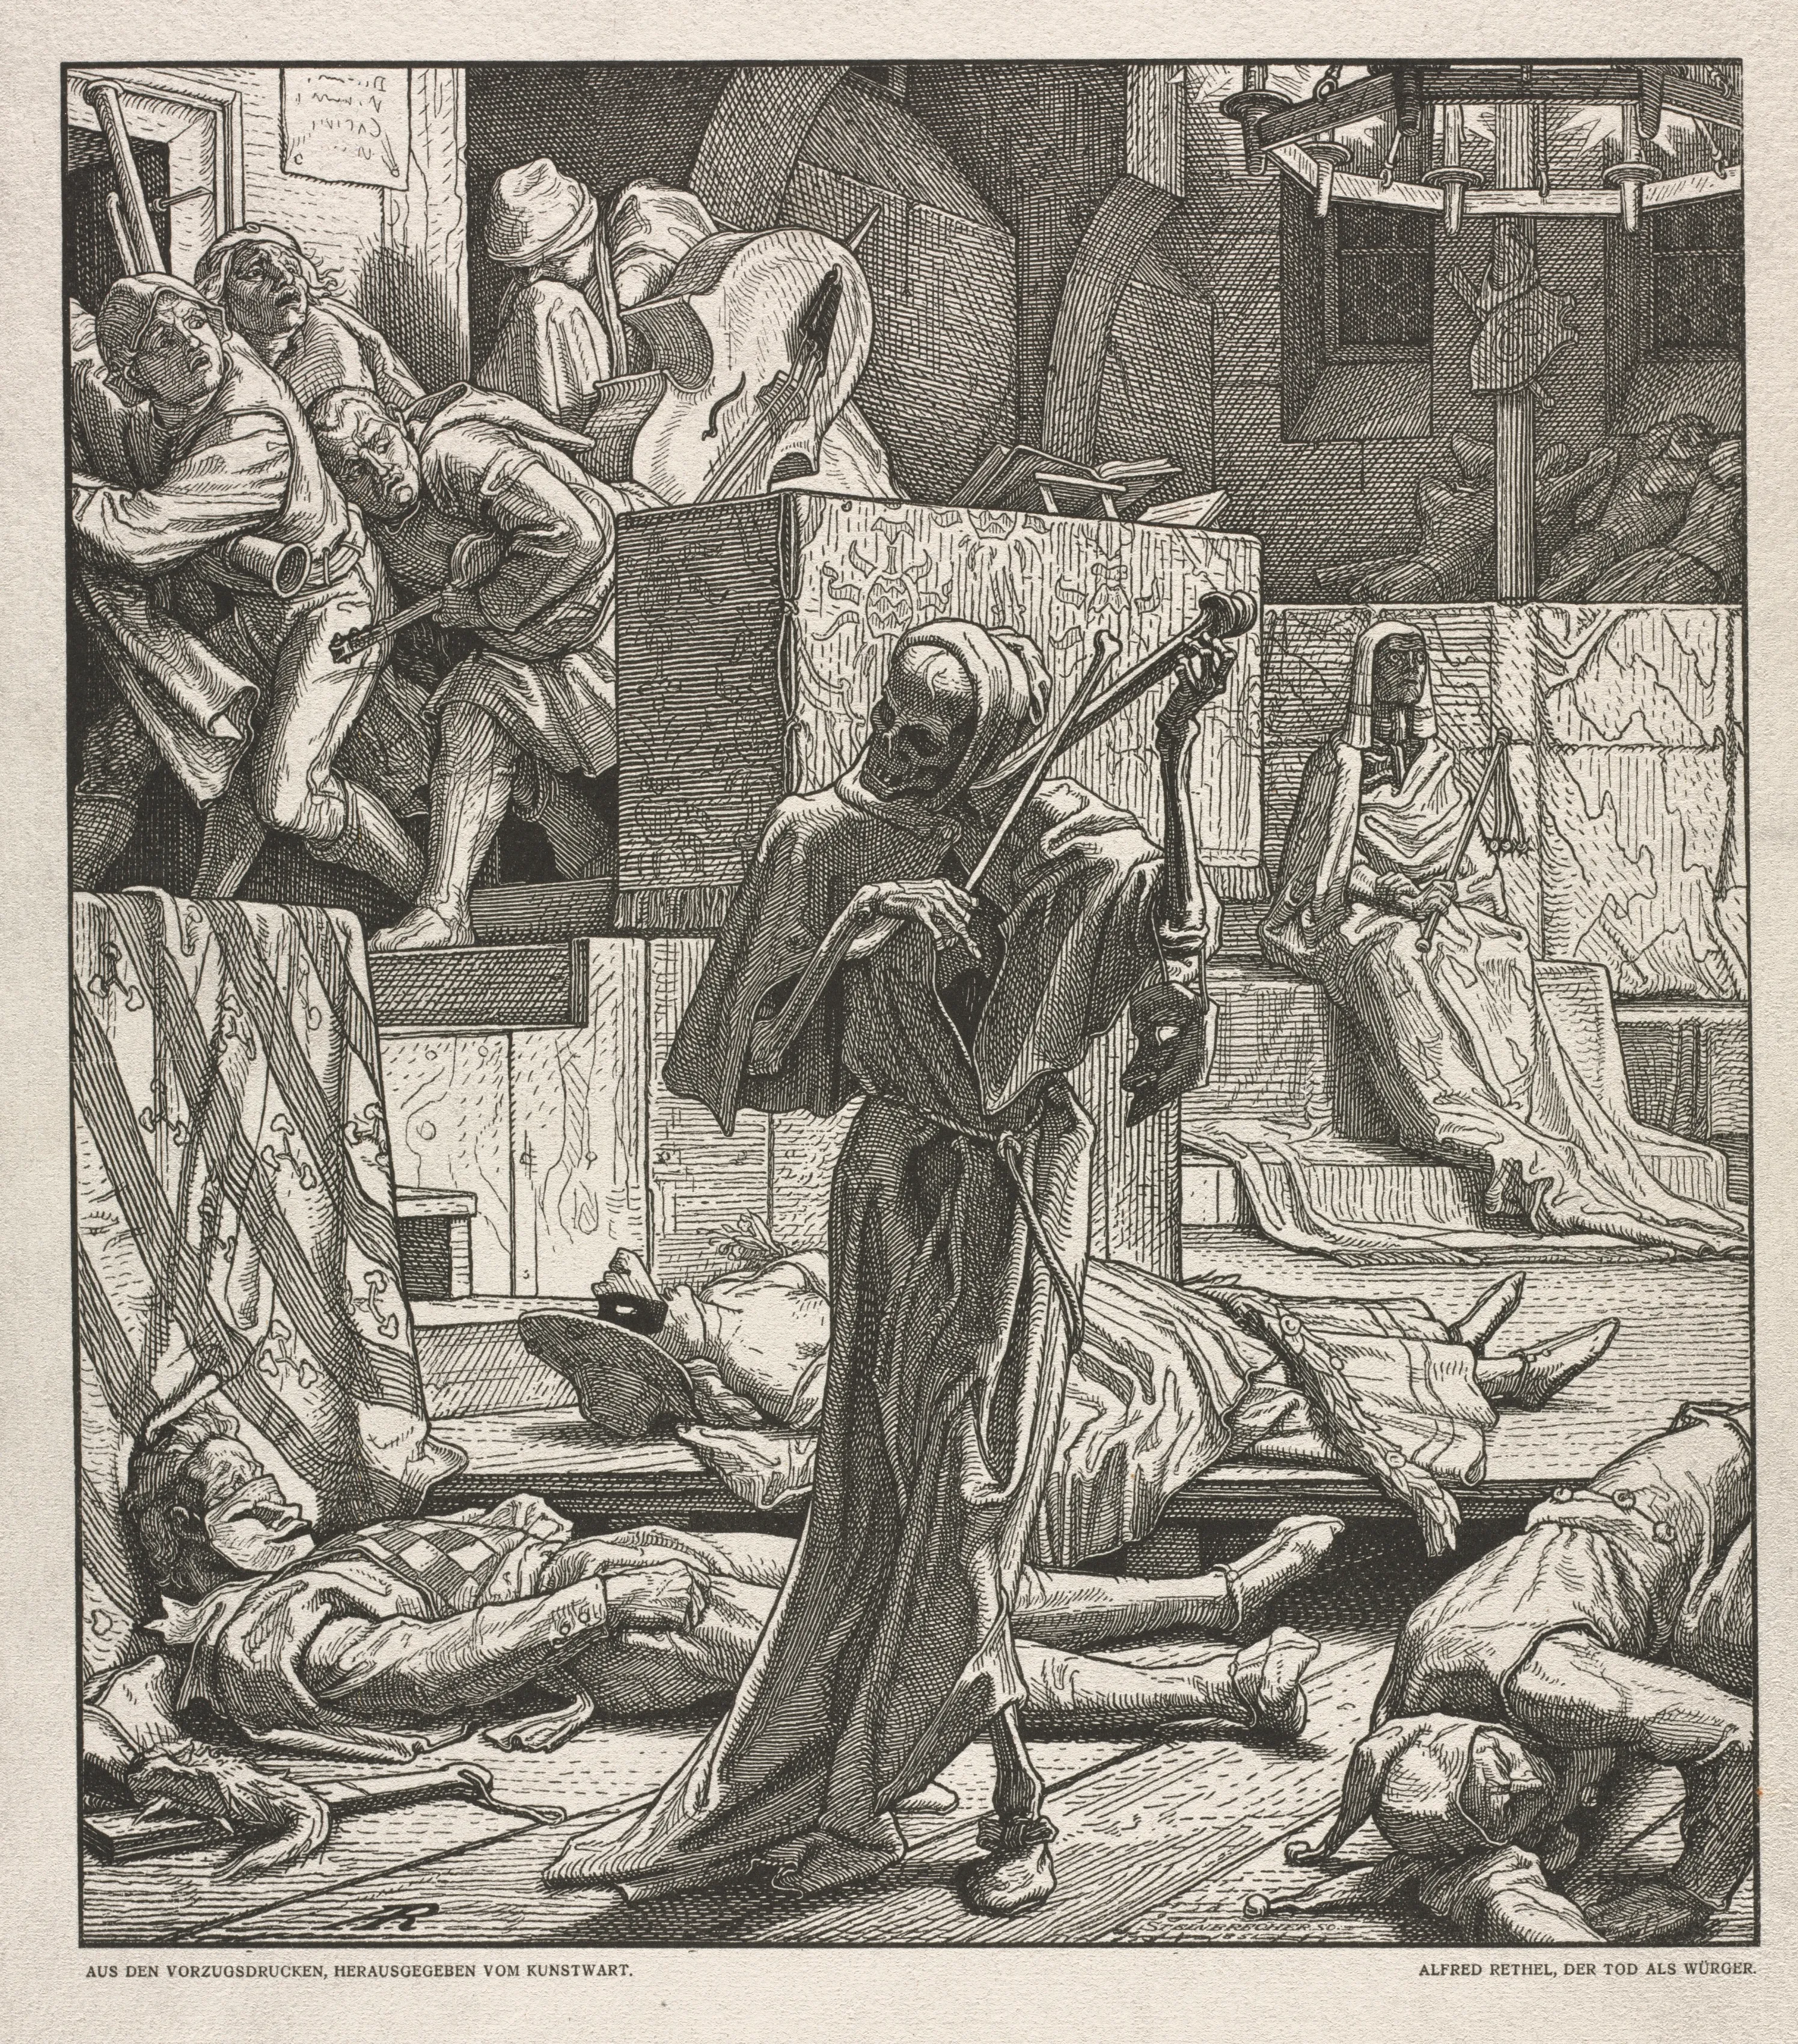 ”Dance of Death: Death the Strangler”, Alfred Rethel, 1850